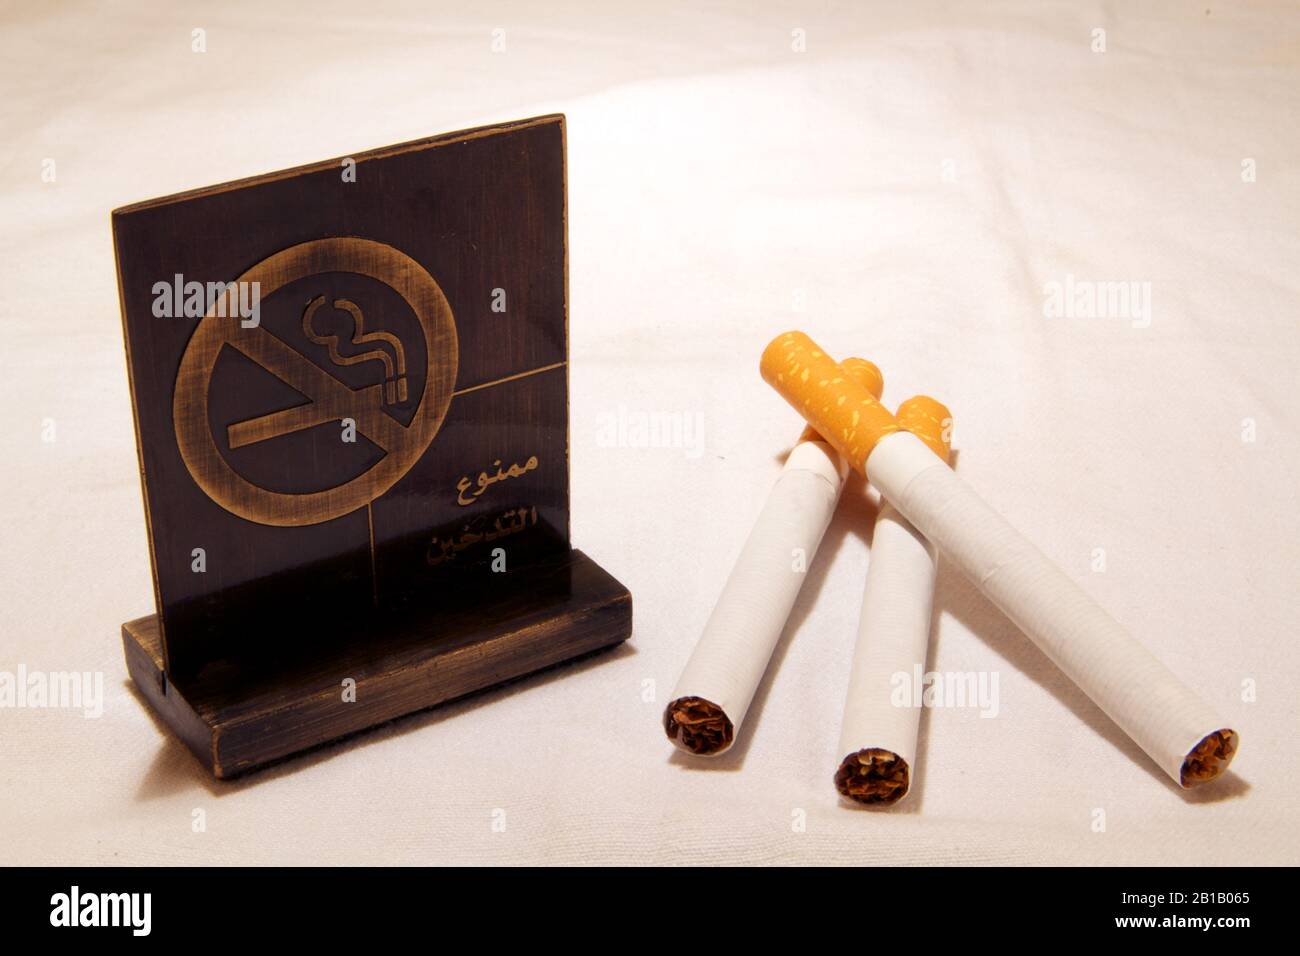 Dubai-No smoking metal tag with cigarettes on the table 19 Stock Photo